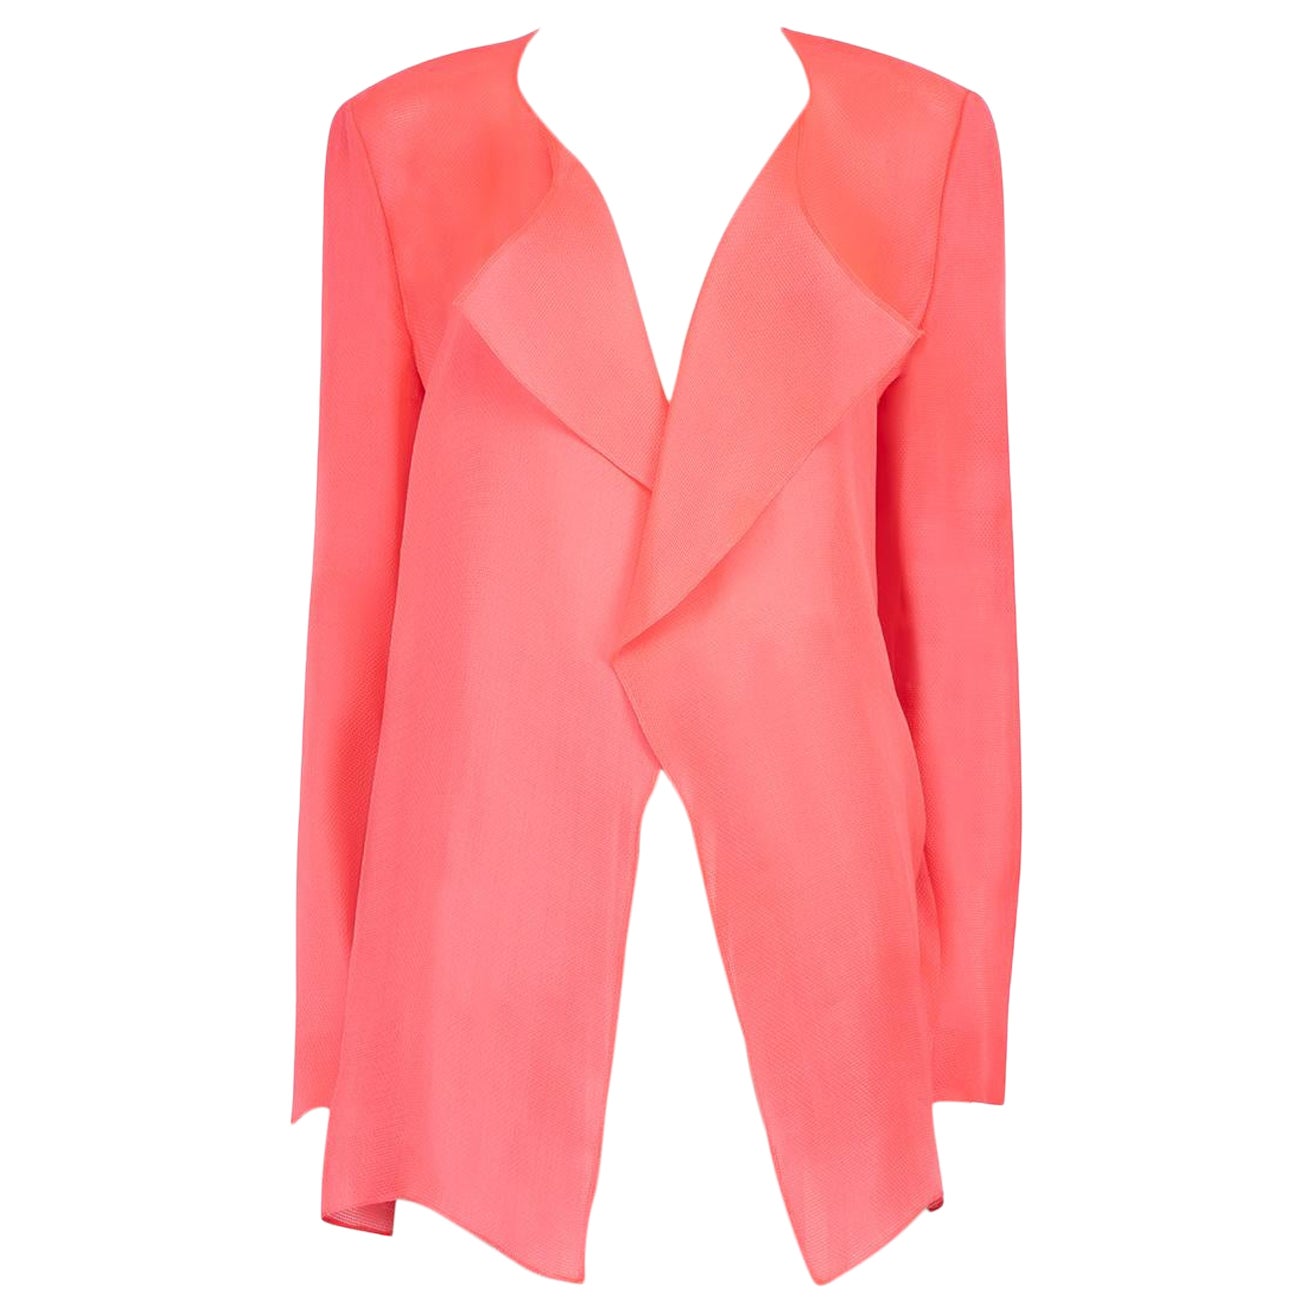 Roksanda Roksanda Ilincic Neon Pink Silk Fine Blazer Size L For Sale